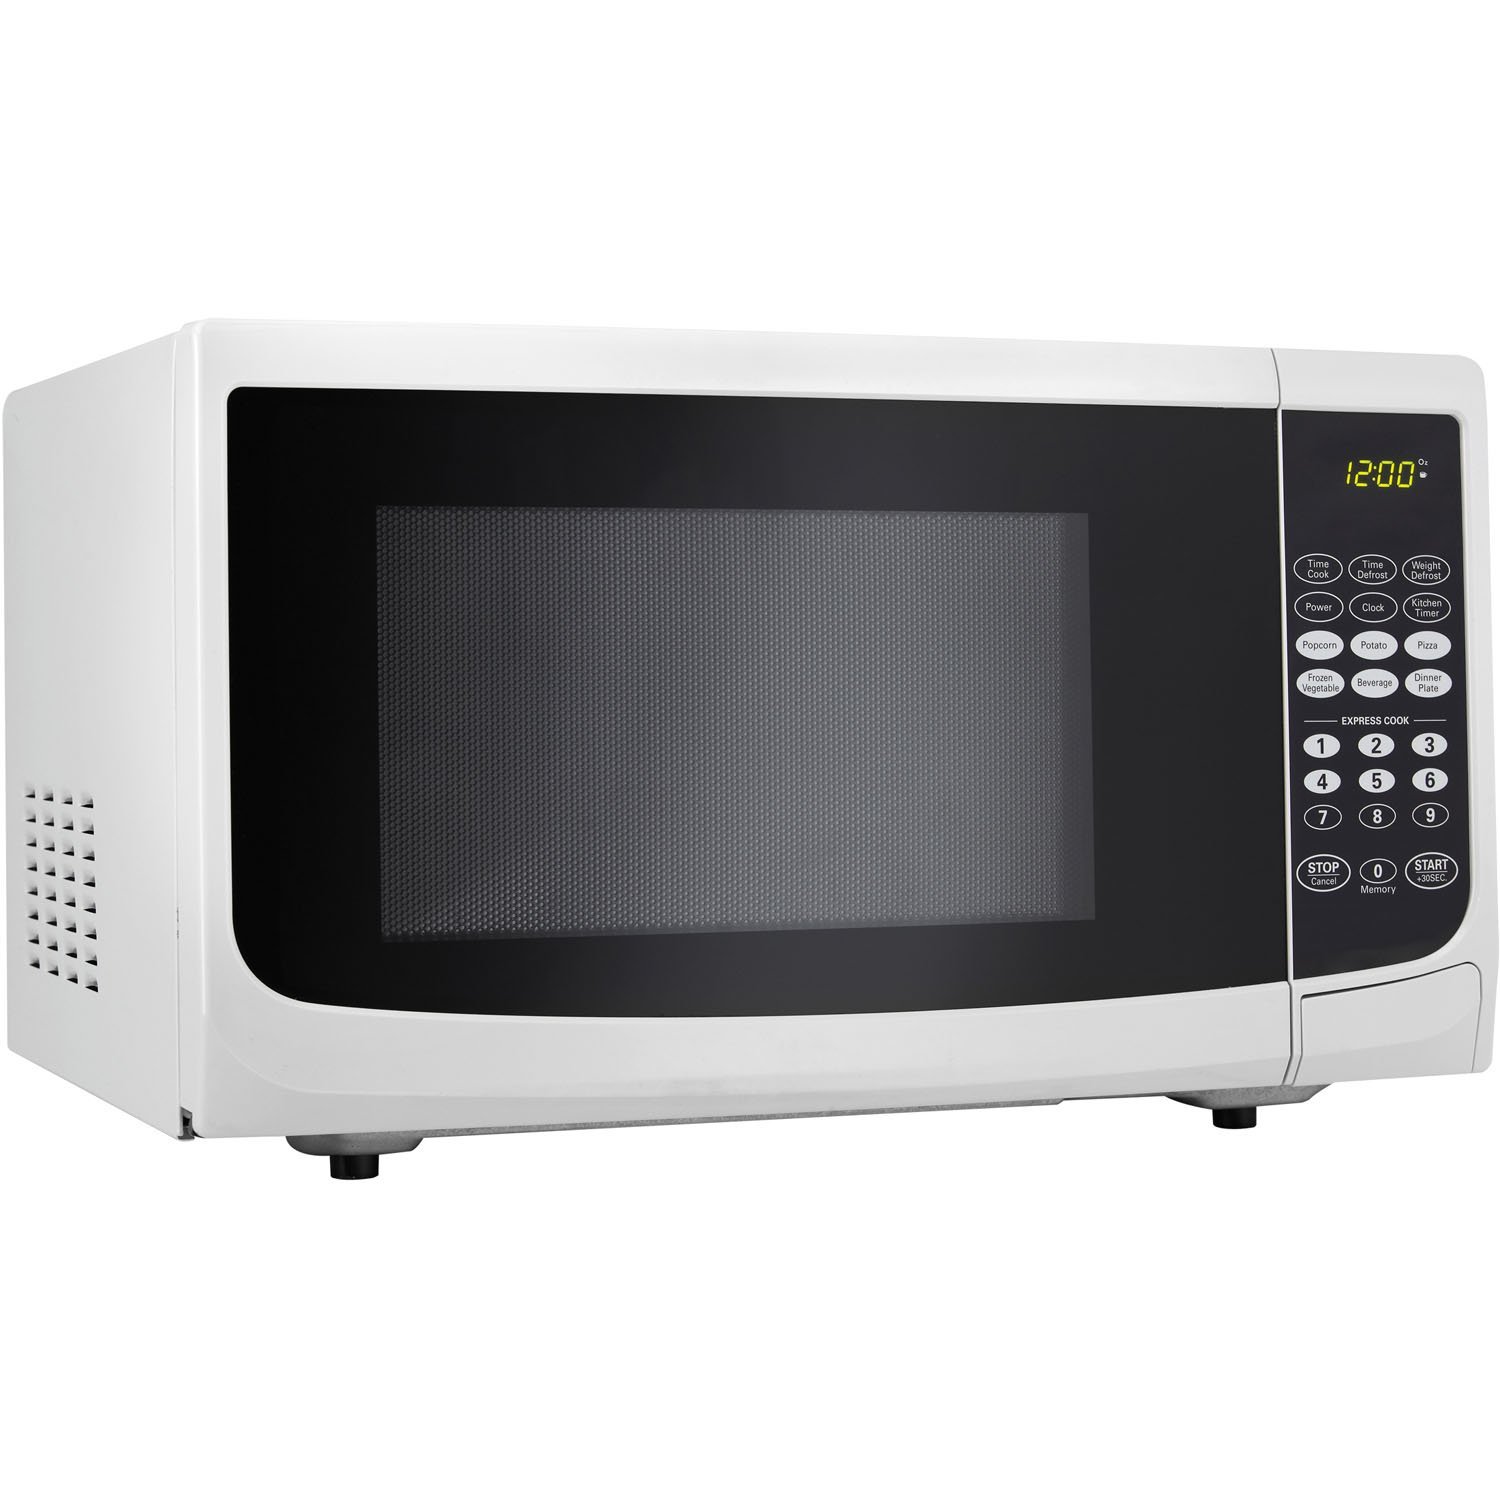 4.Danby 0.7 cu.ft. Countertop Microwave, White